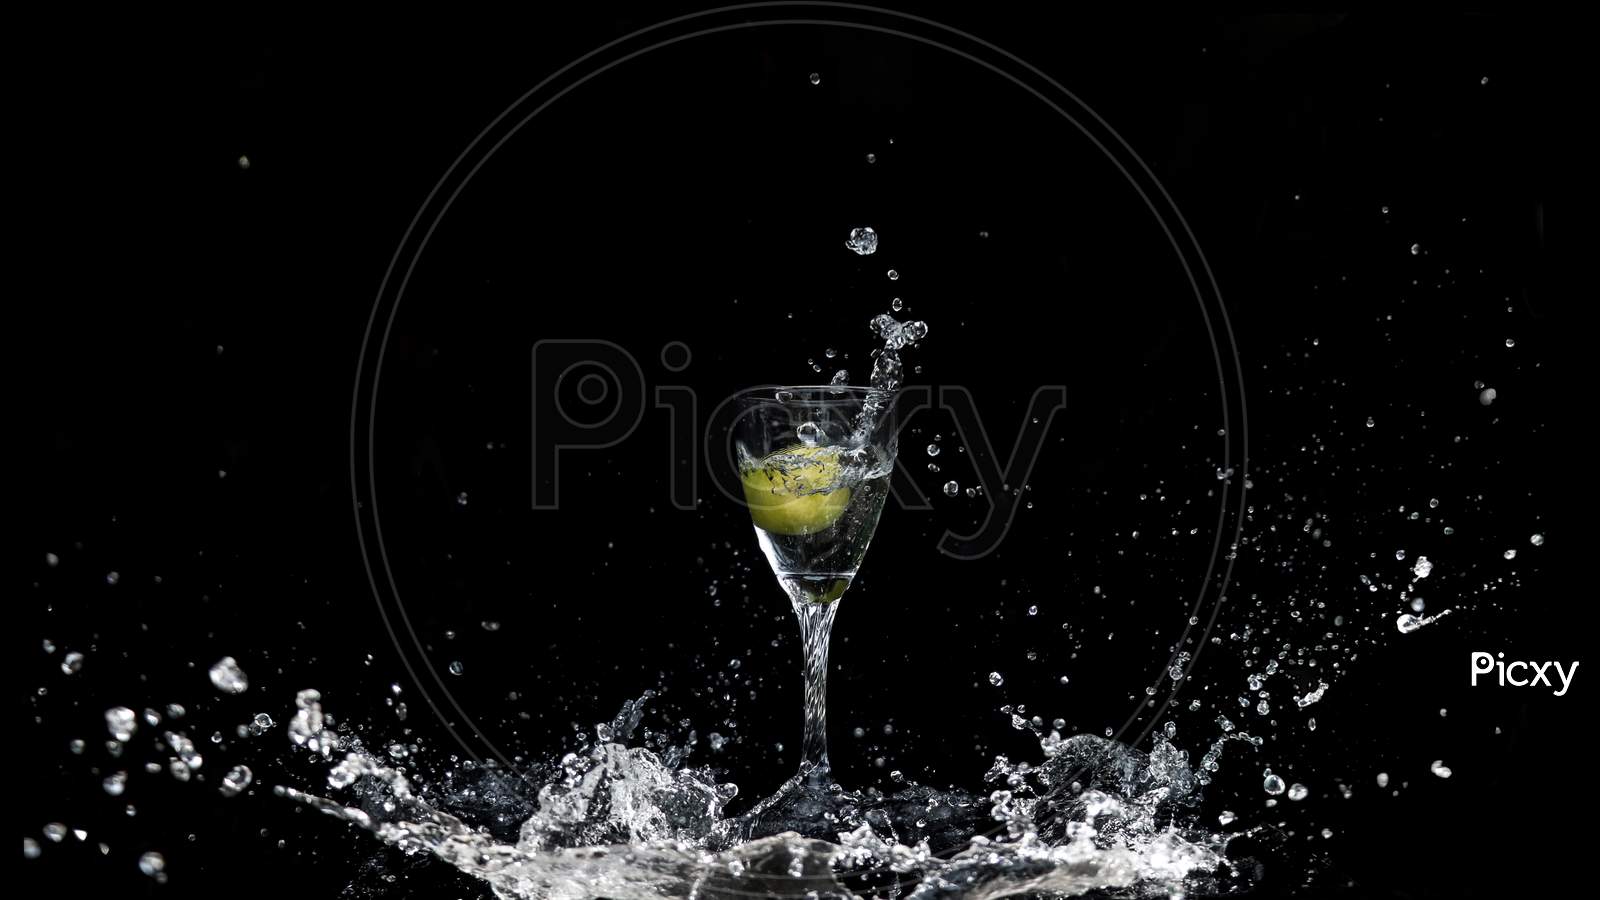 Big Splash Of Water Into Wine Glass